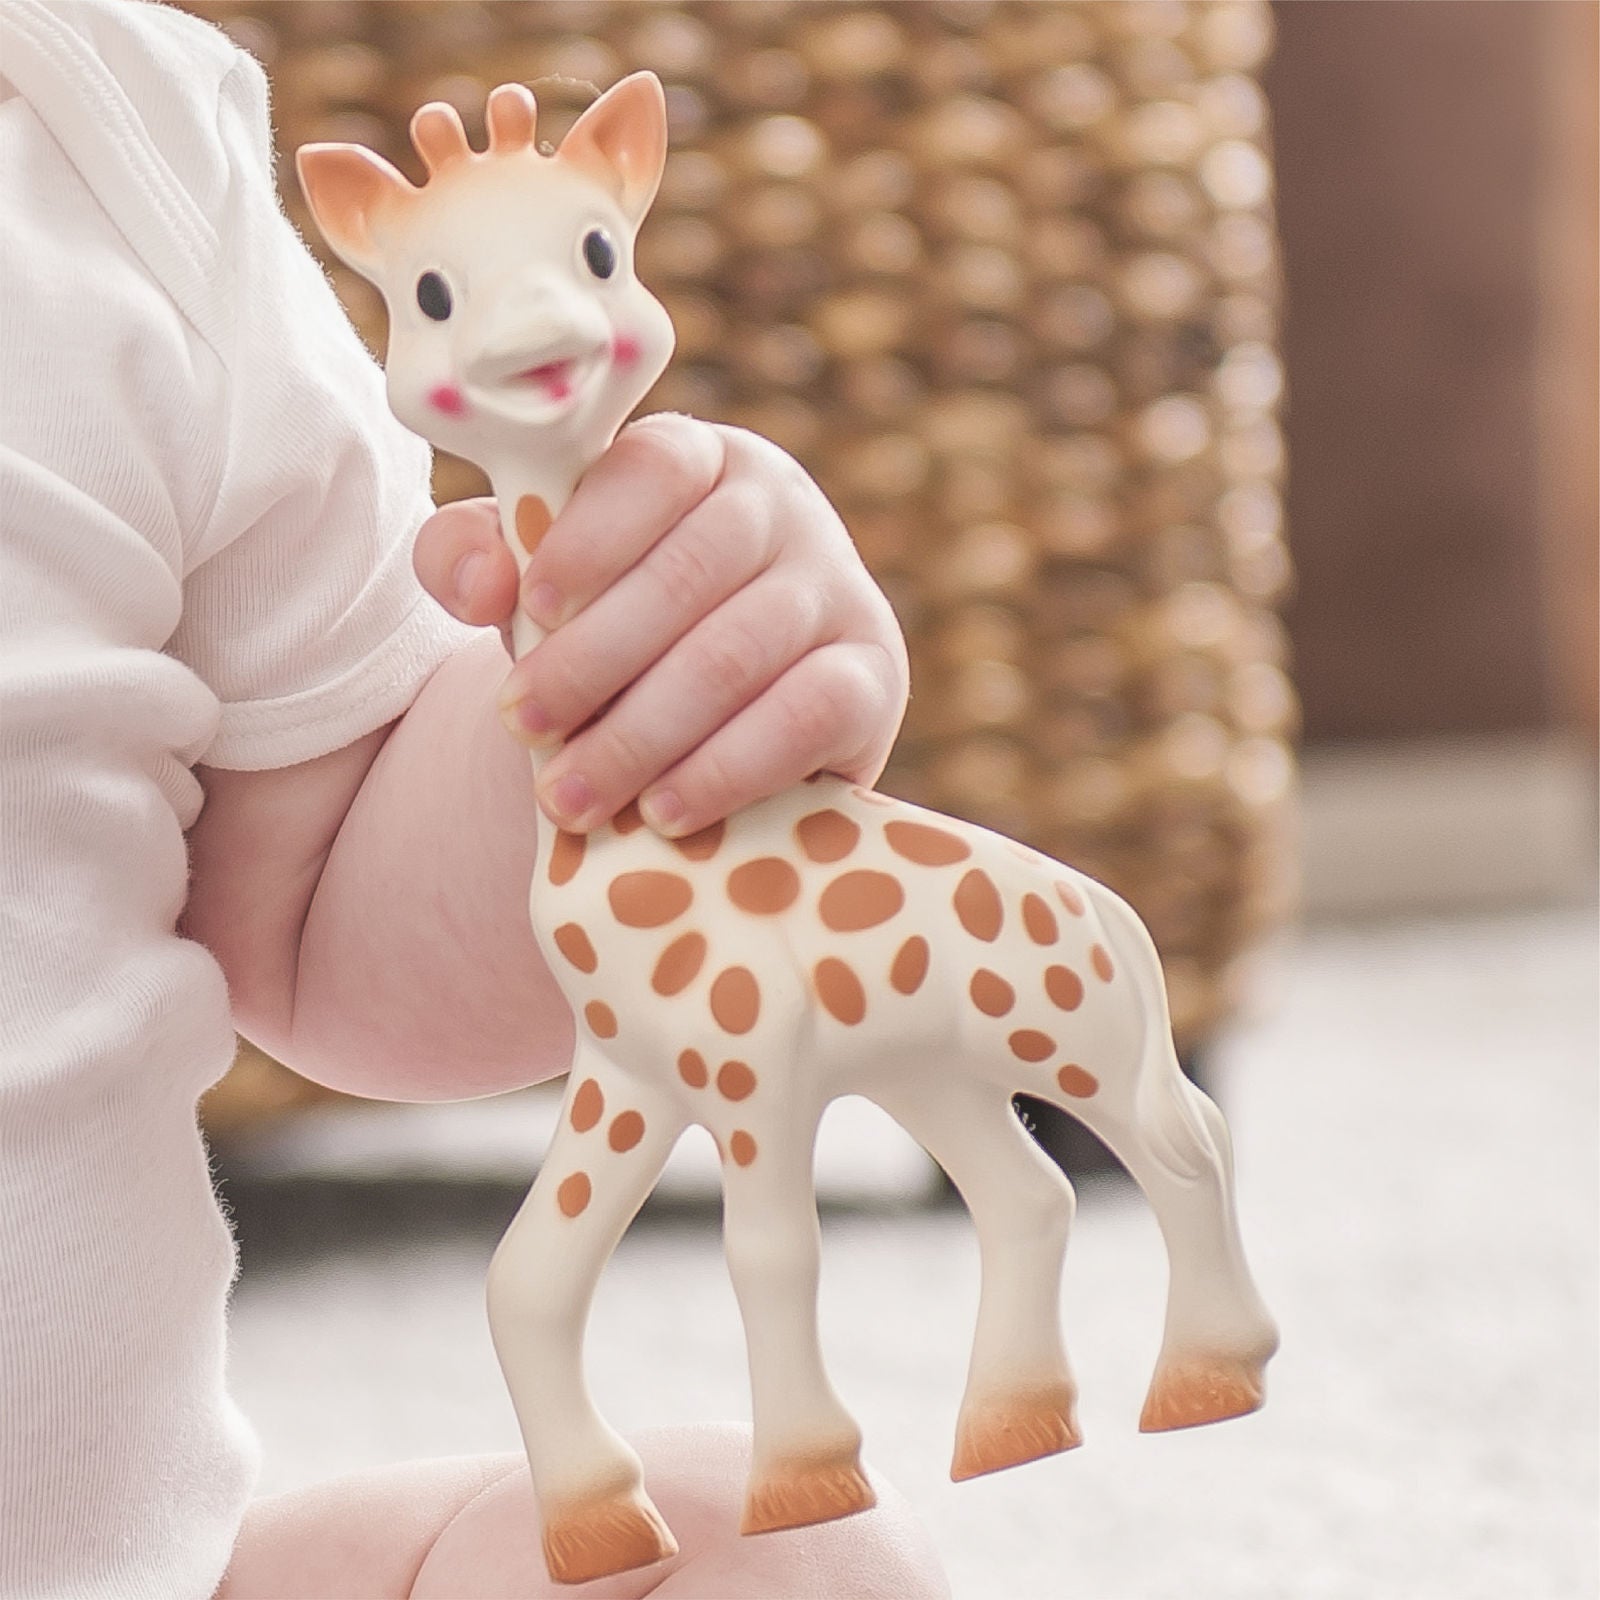 Sophie la Girafe Baby shower gift set